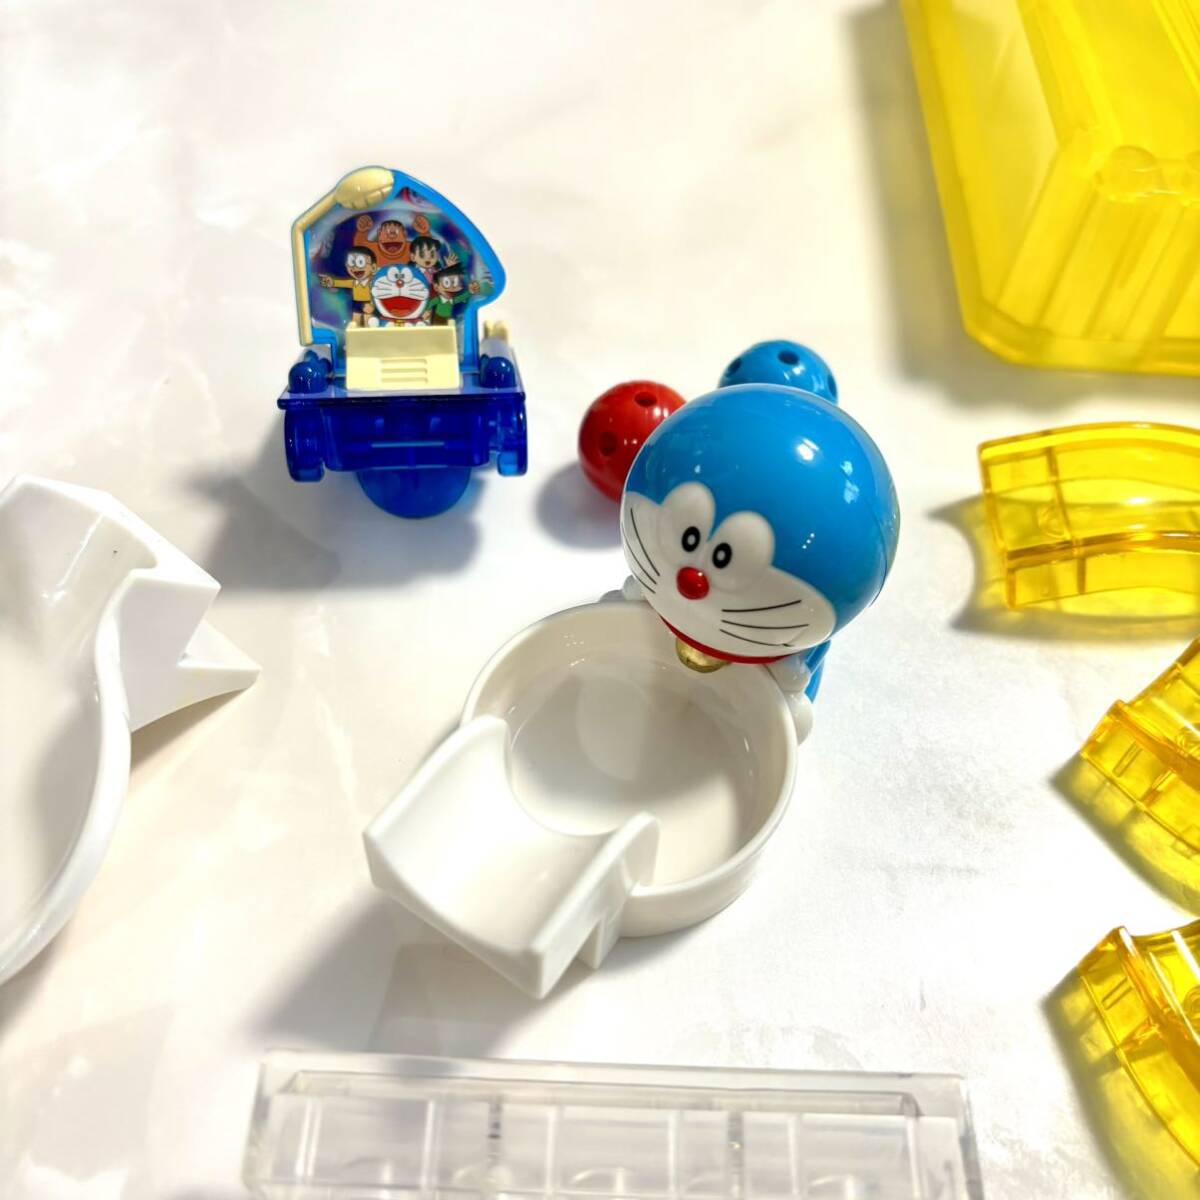  intellectual training toy ... switch Doraemon First kit analogue programming 